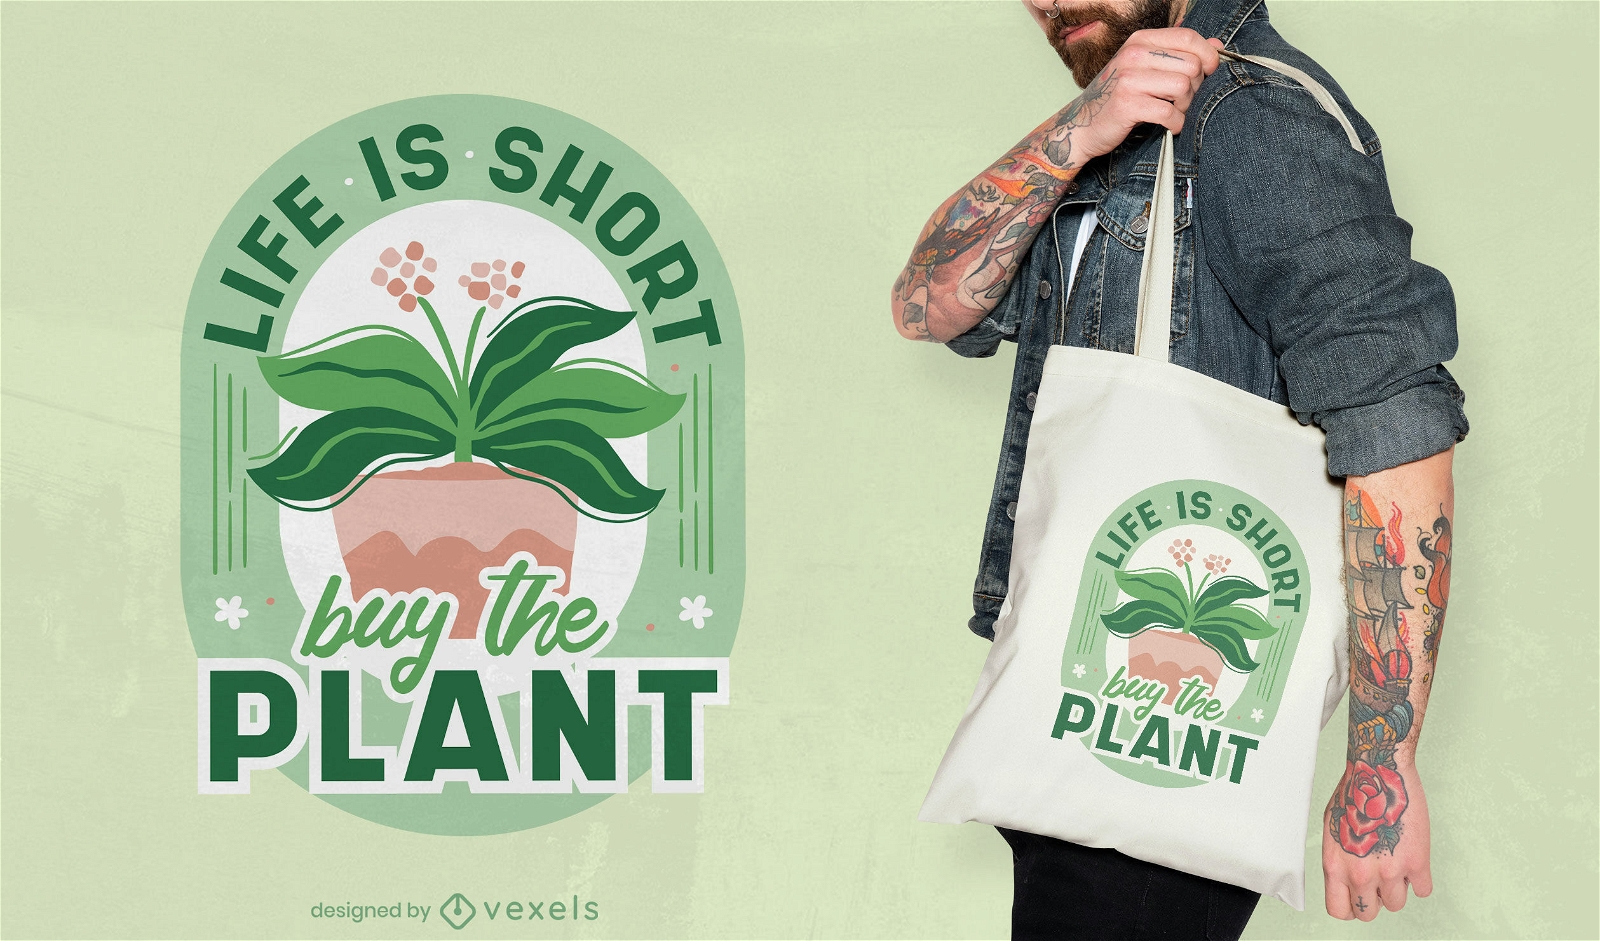 Compre o design da sacola de plantas